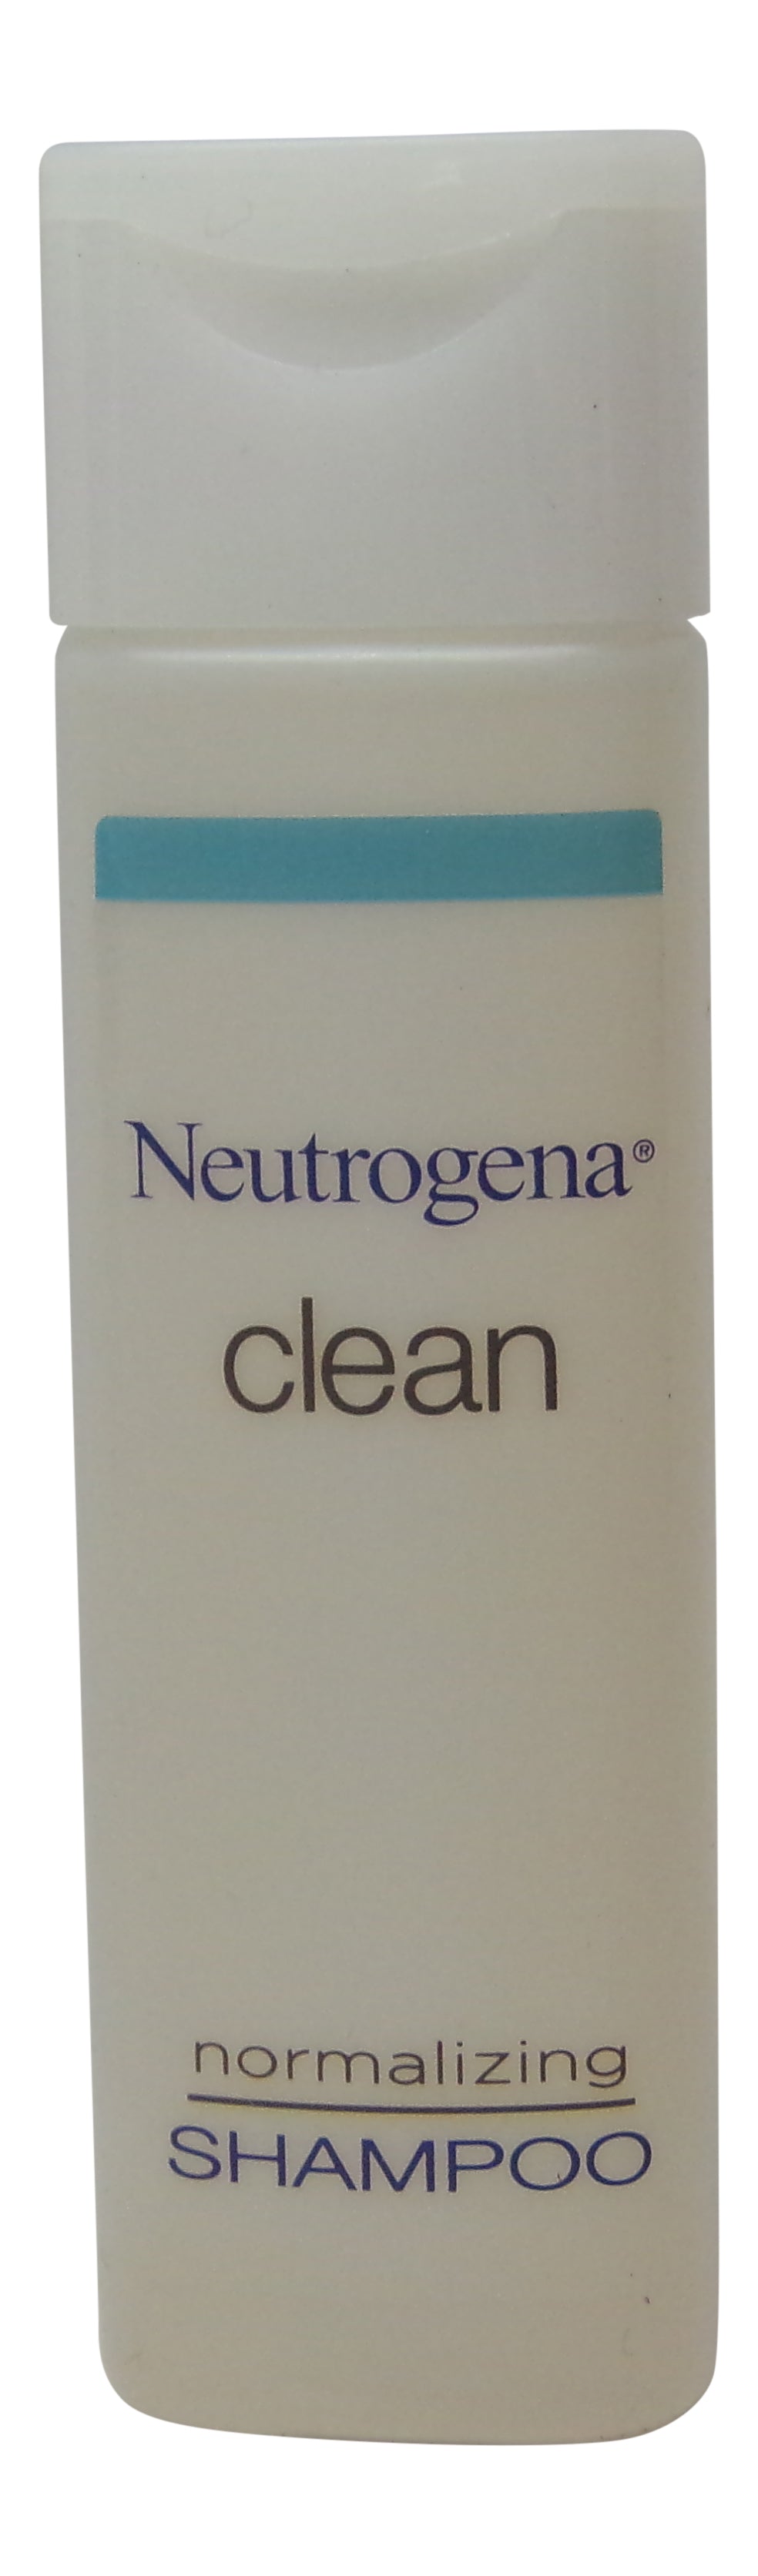 Neutrogena Clean Normalizing Shampoo lot of 10 ea 0.8oz Bottles Total 8oz